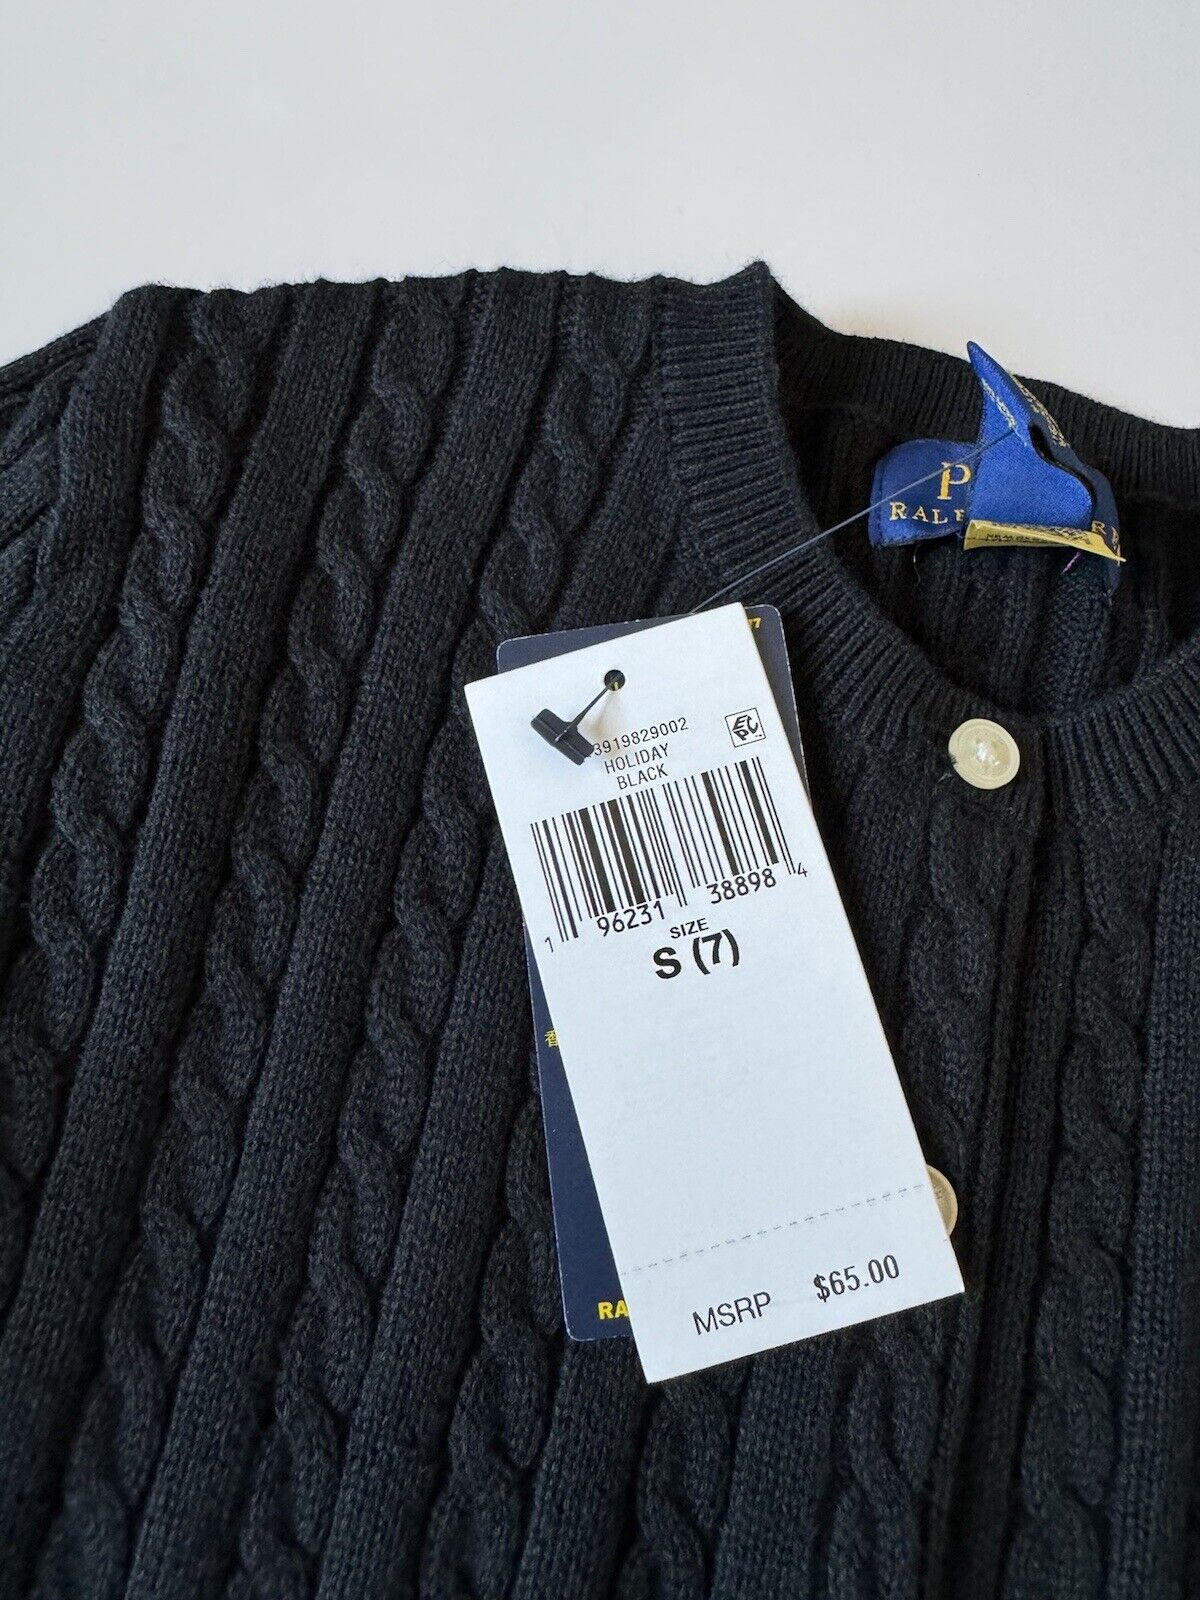 NWT Polo Ralph Lauren Bear Girl's Black Cotton Botton Sweater Size 7